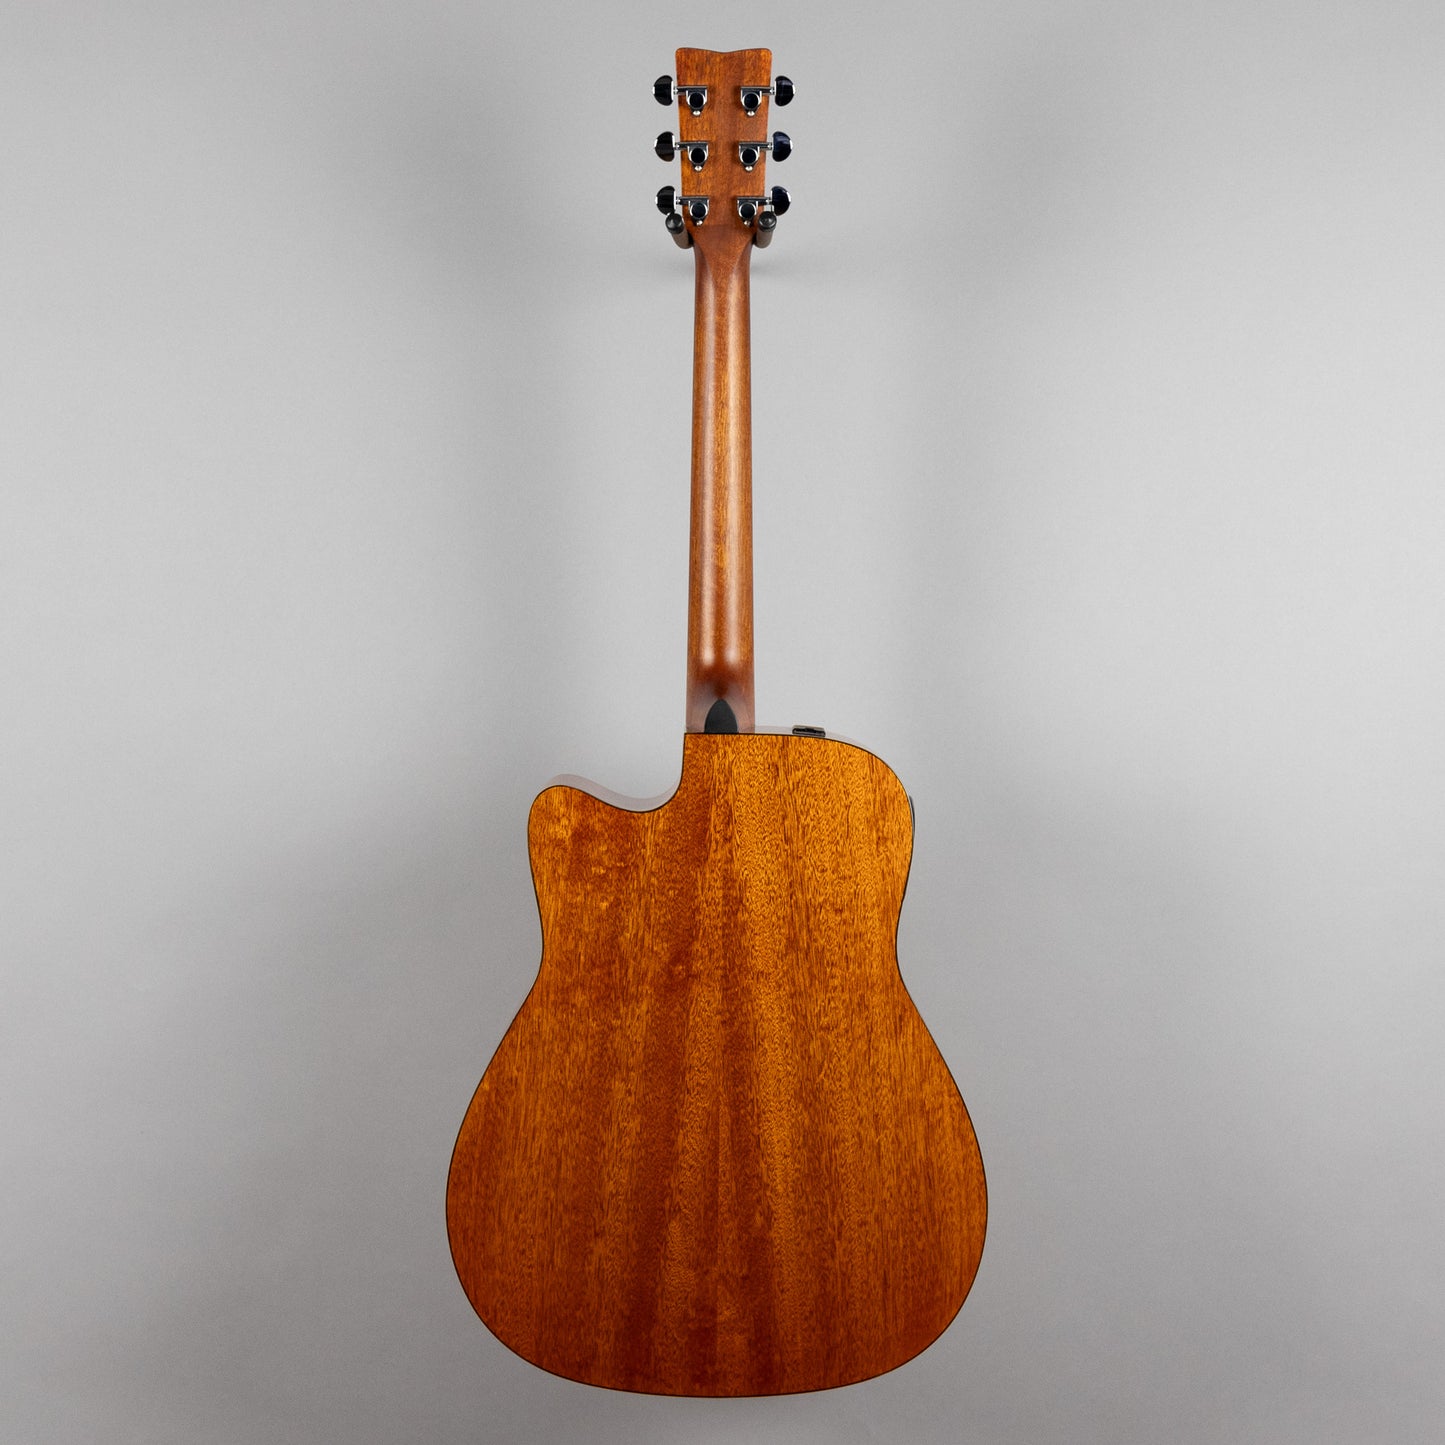 Yamaha FGX800C Acoustic/Electric Guitar